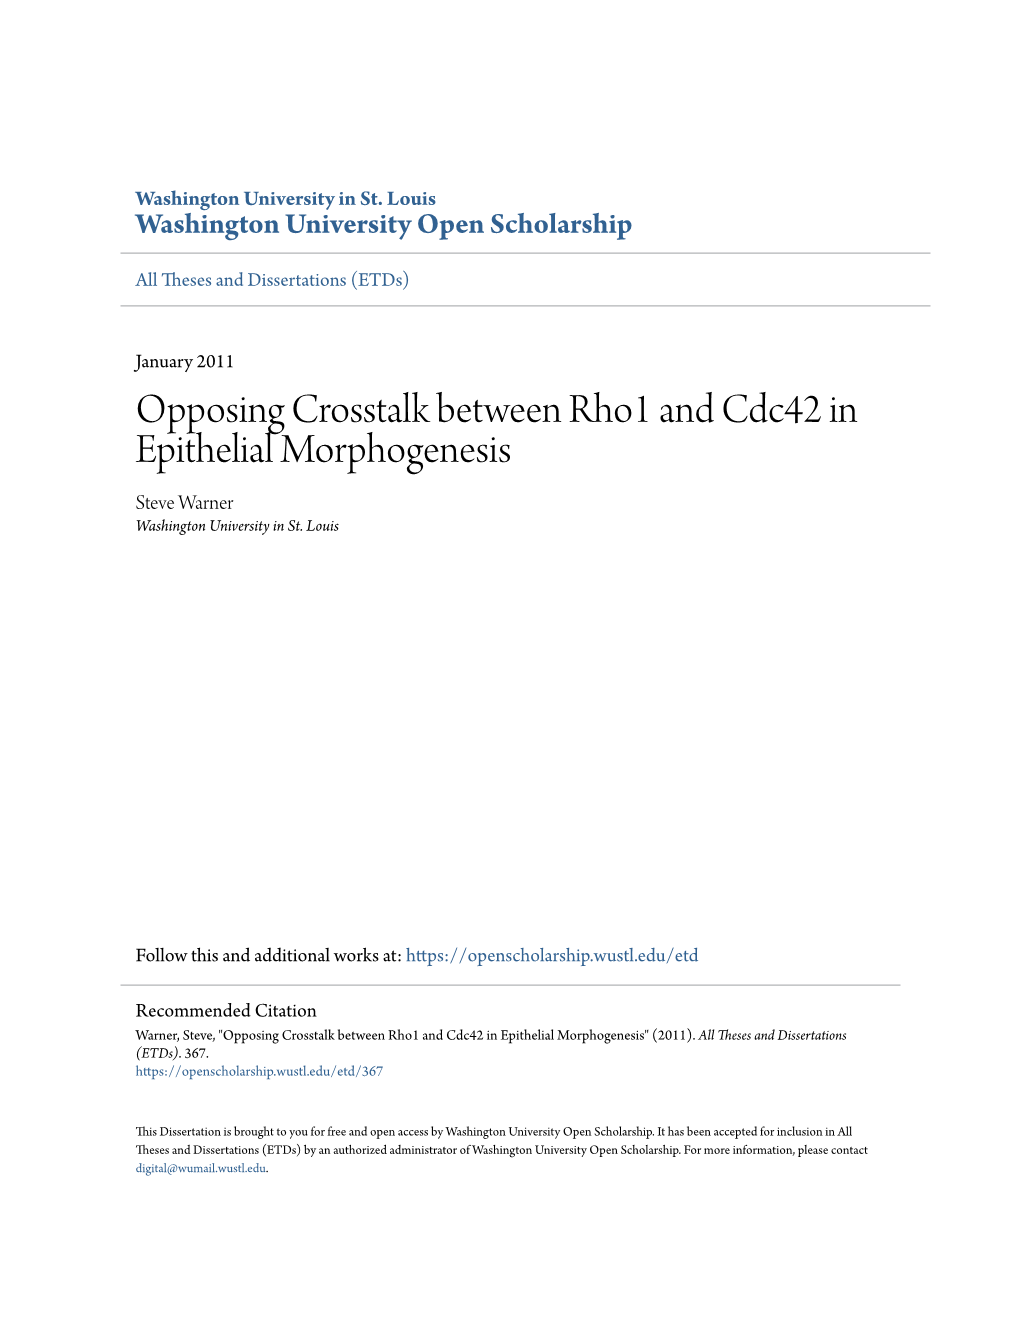 Opposing Crosstalk Between Rho1 and Cdc42 in Epithelial Morphogenesis Steve Warner Washington University in St